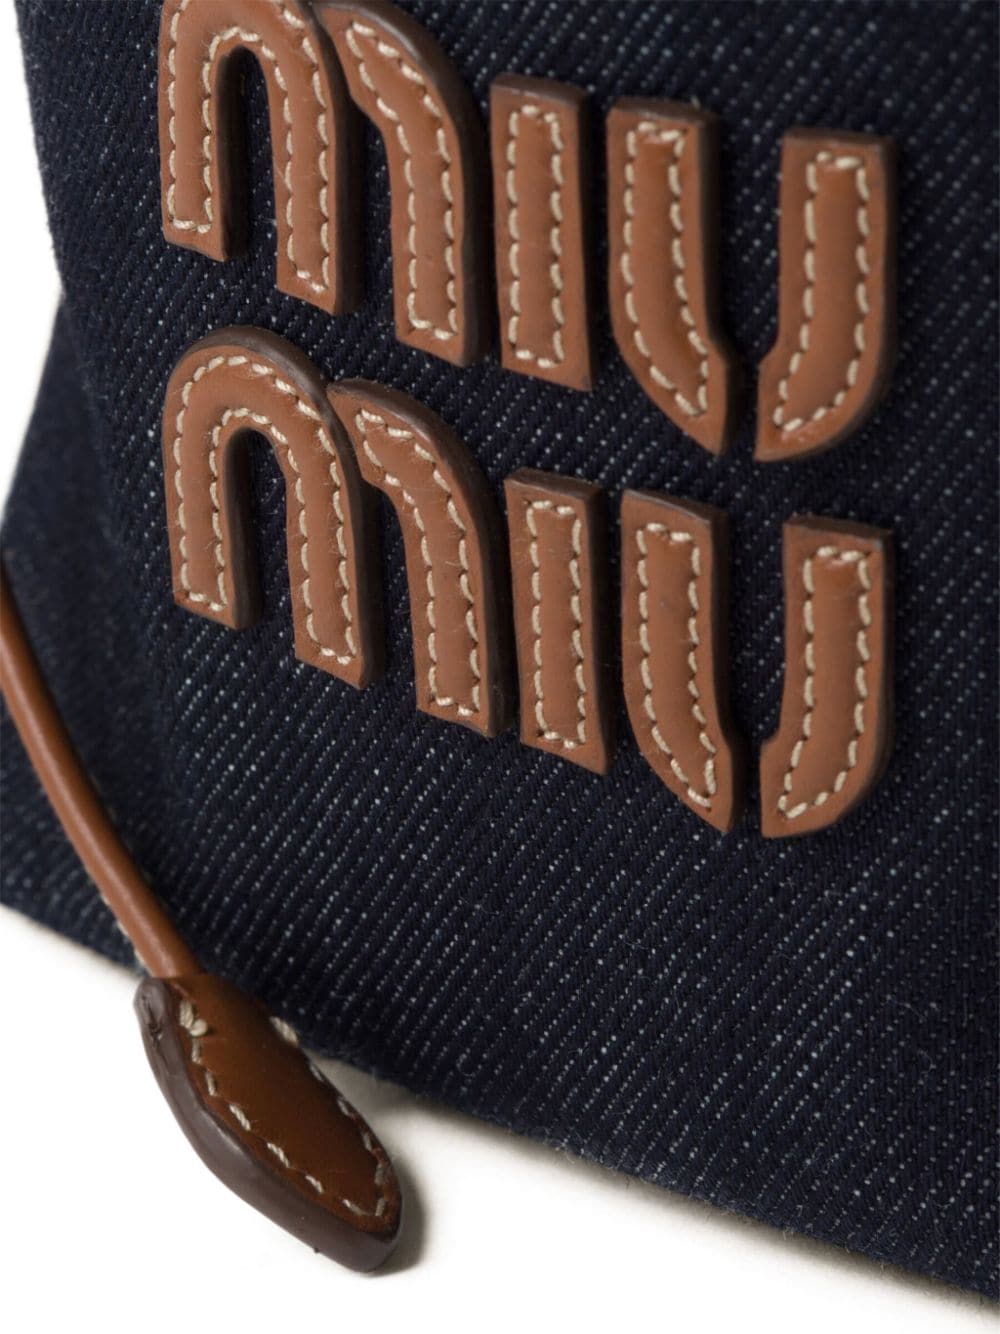 Miu Miu logo-lettering Denim Bucket Bag